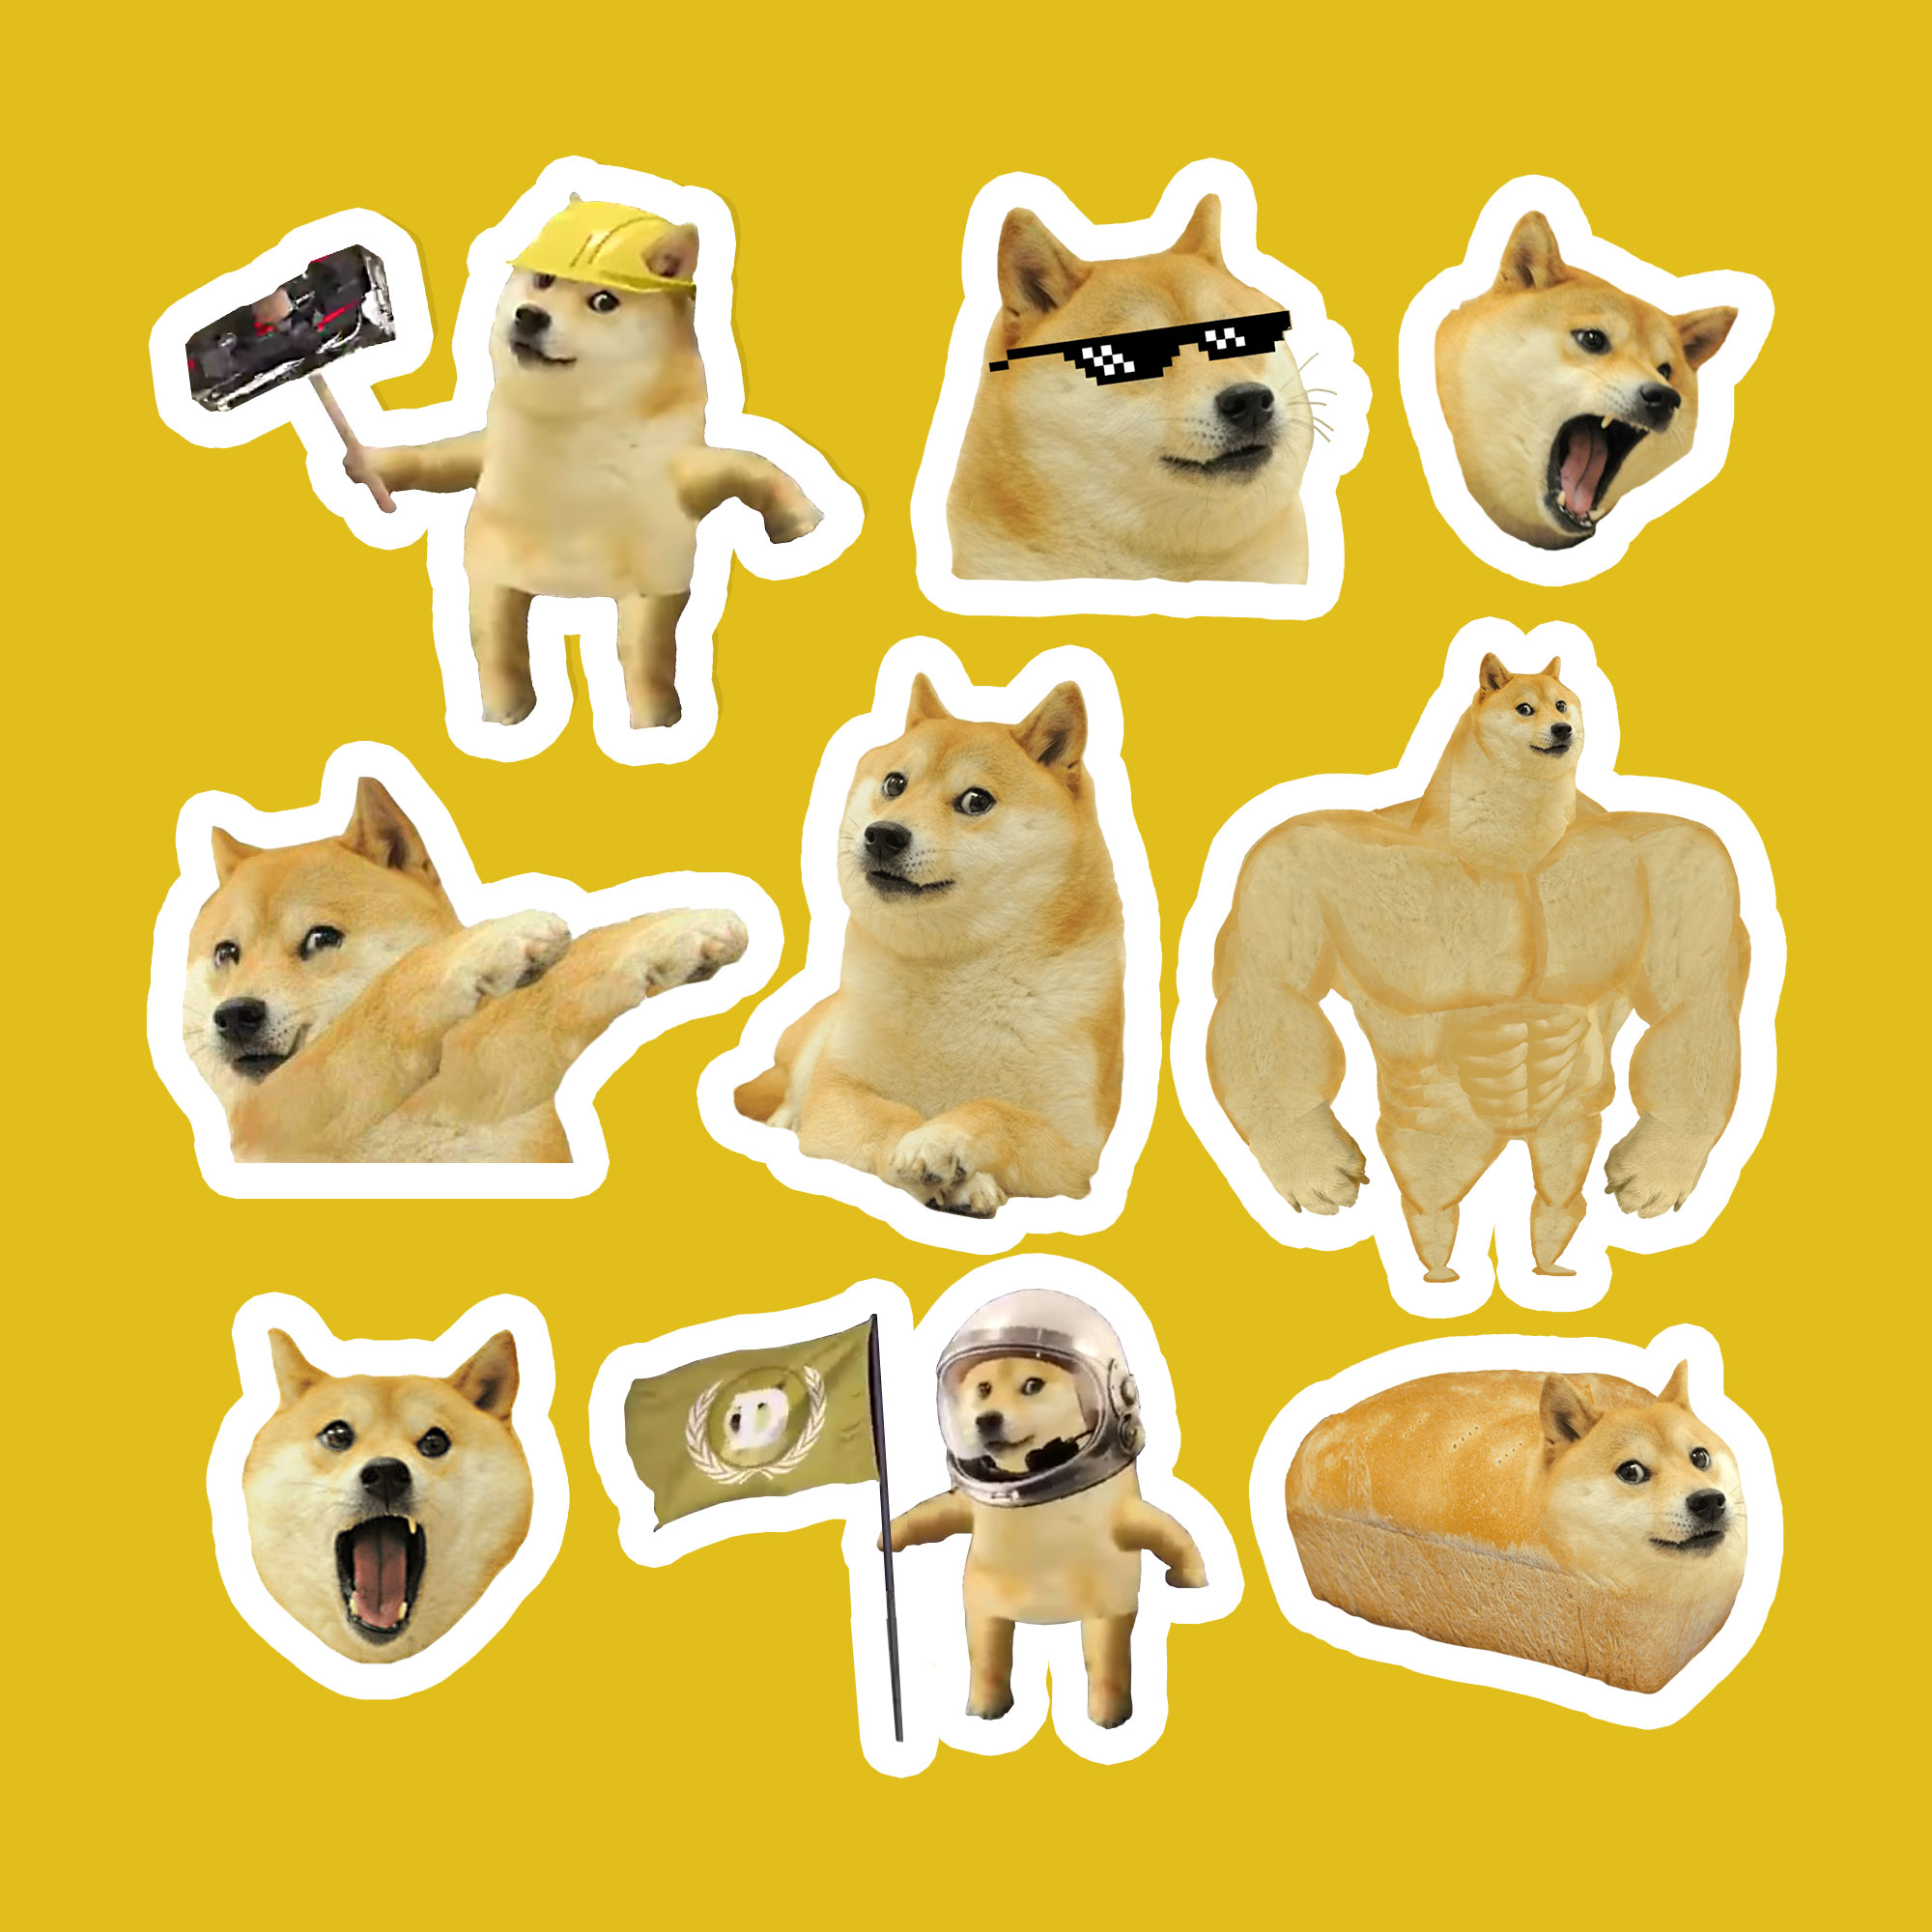 Doge Meme Stickers - Dogecoin Meme Stickers Sheet